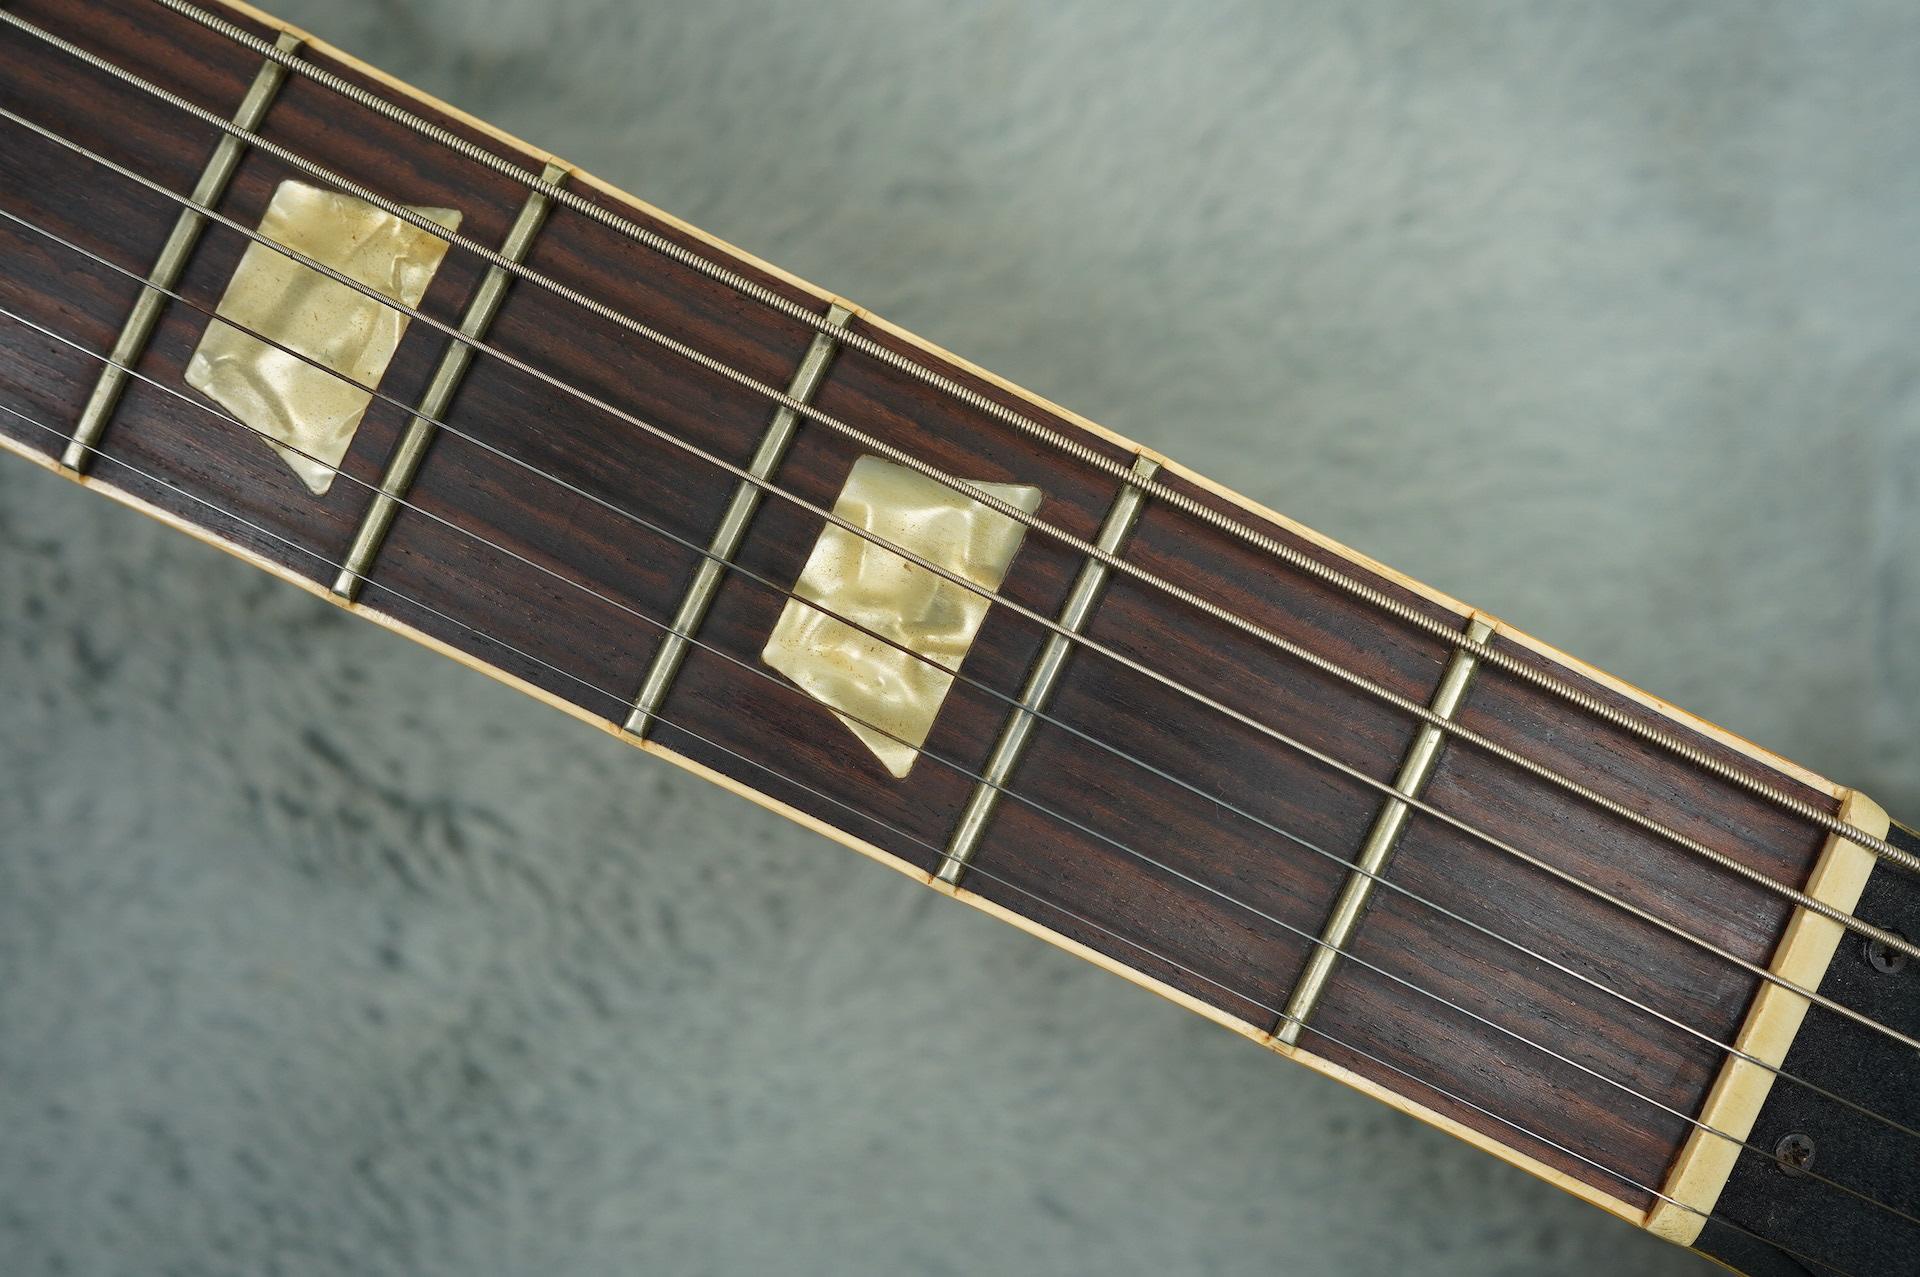 1990 Gibson Firebird white